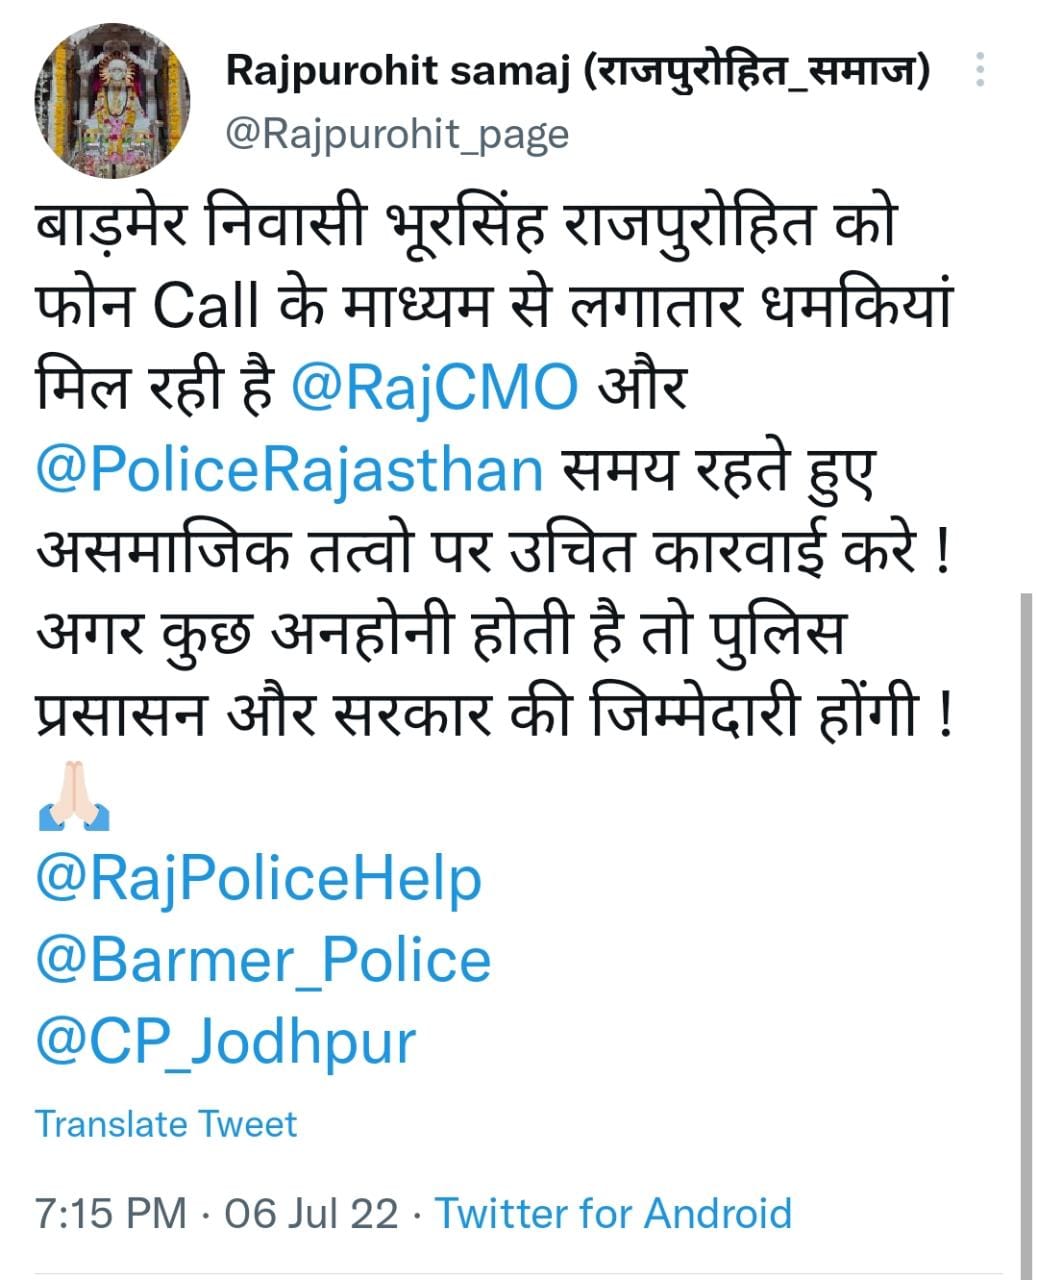 Tweet of Rajpurohit Samaj